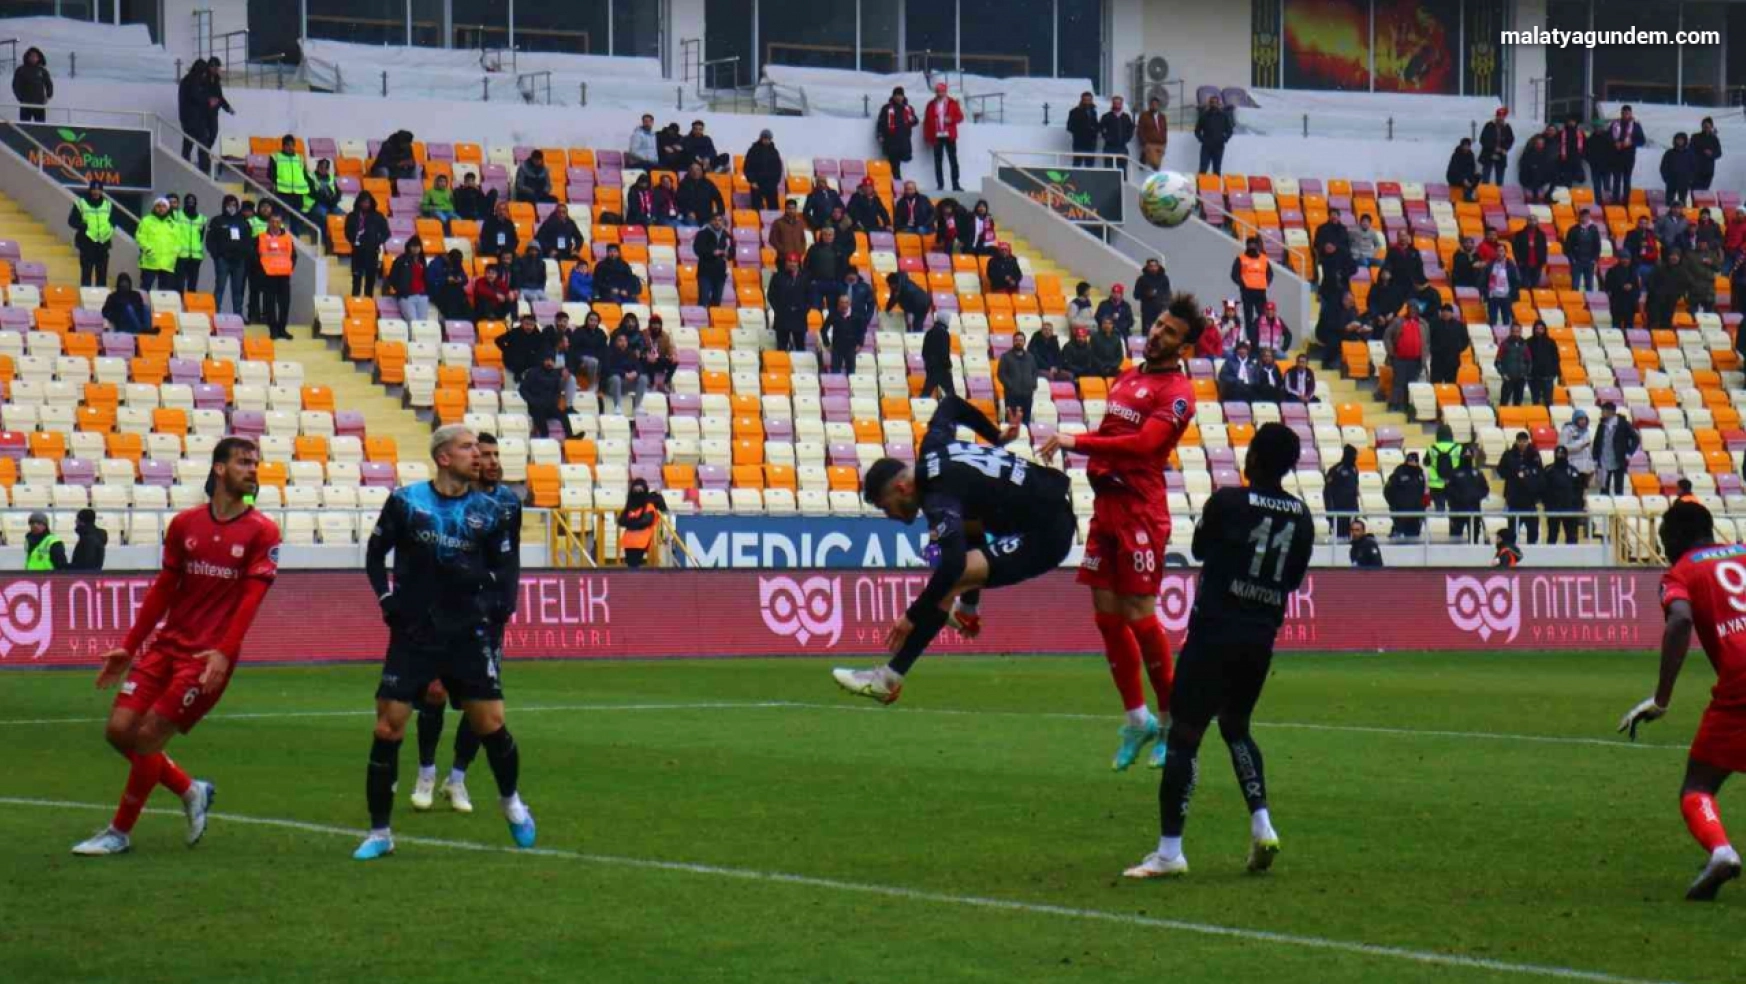 Spor Toto Süper Lig: DG Sivasspor: 1 - Adana Demirspor: 2 (Maç sonucu)